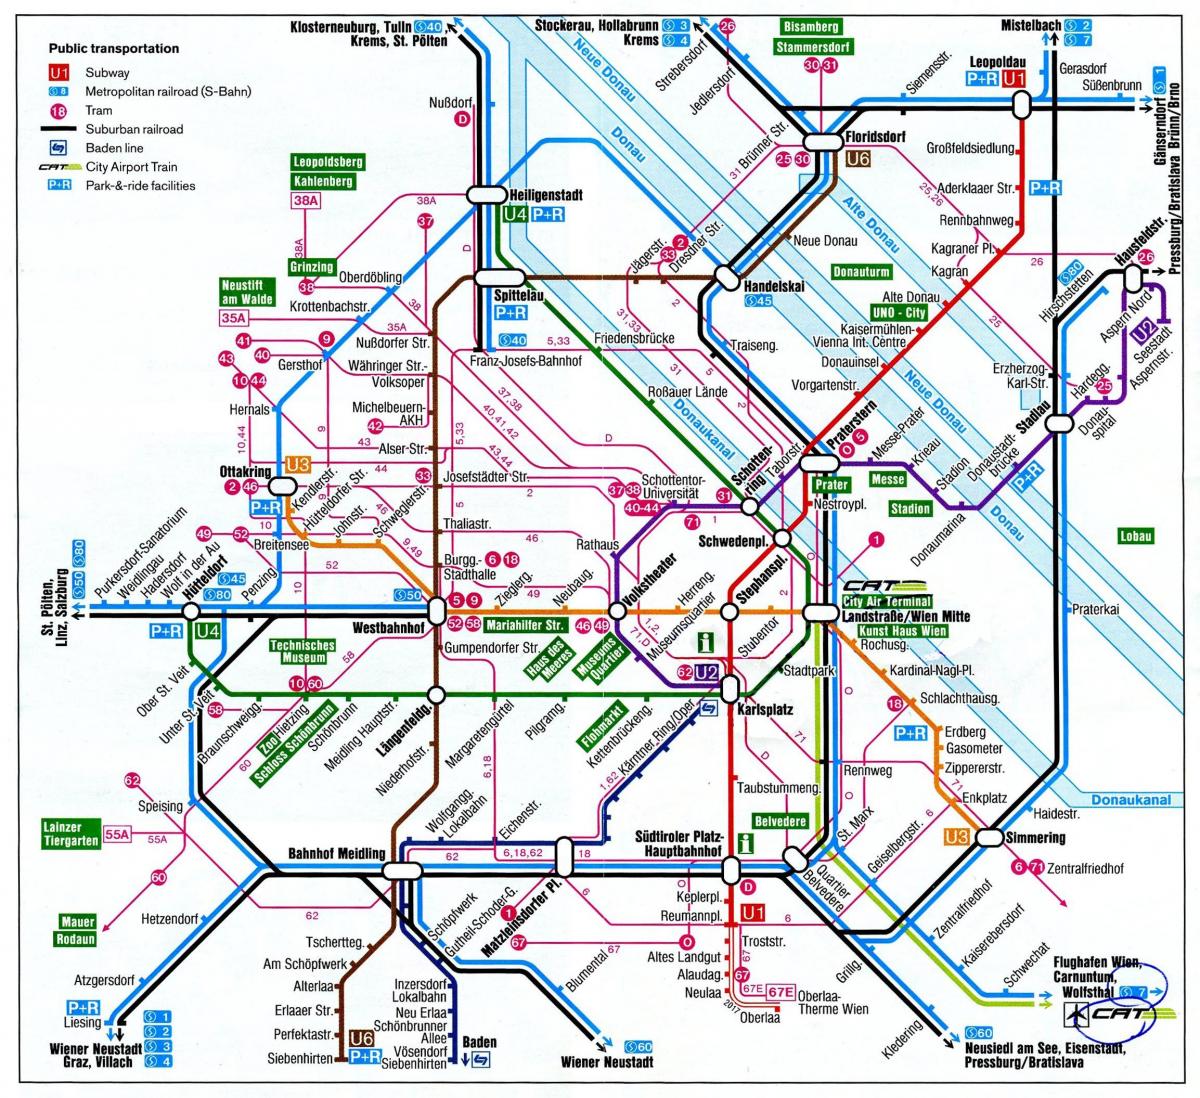 Kaart van Wene Oostenryk trein